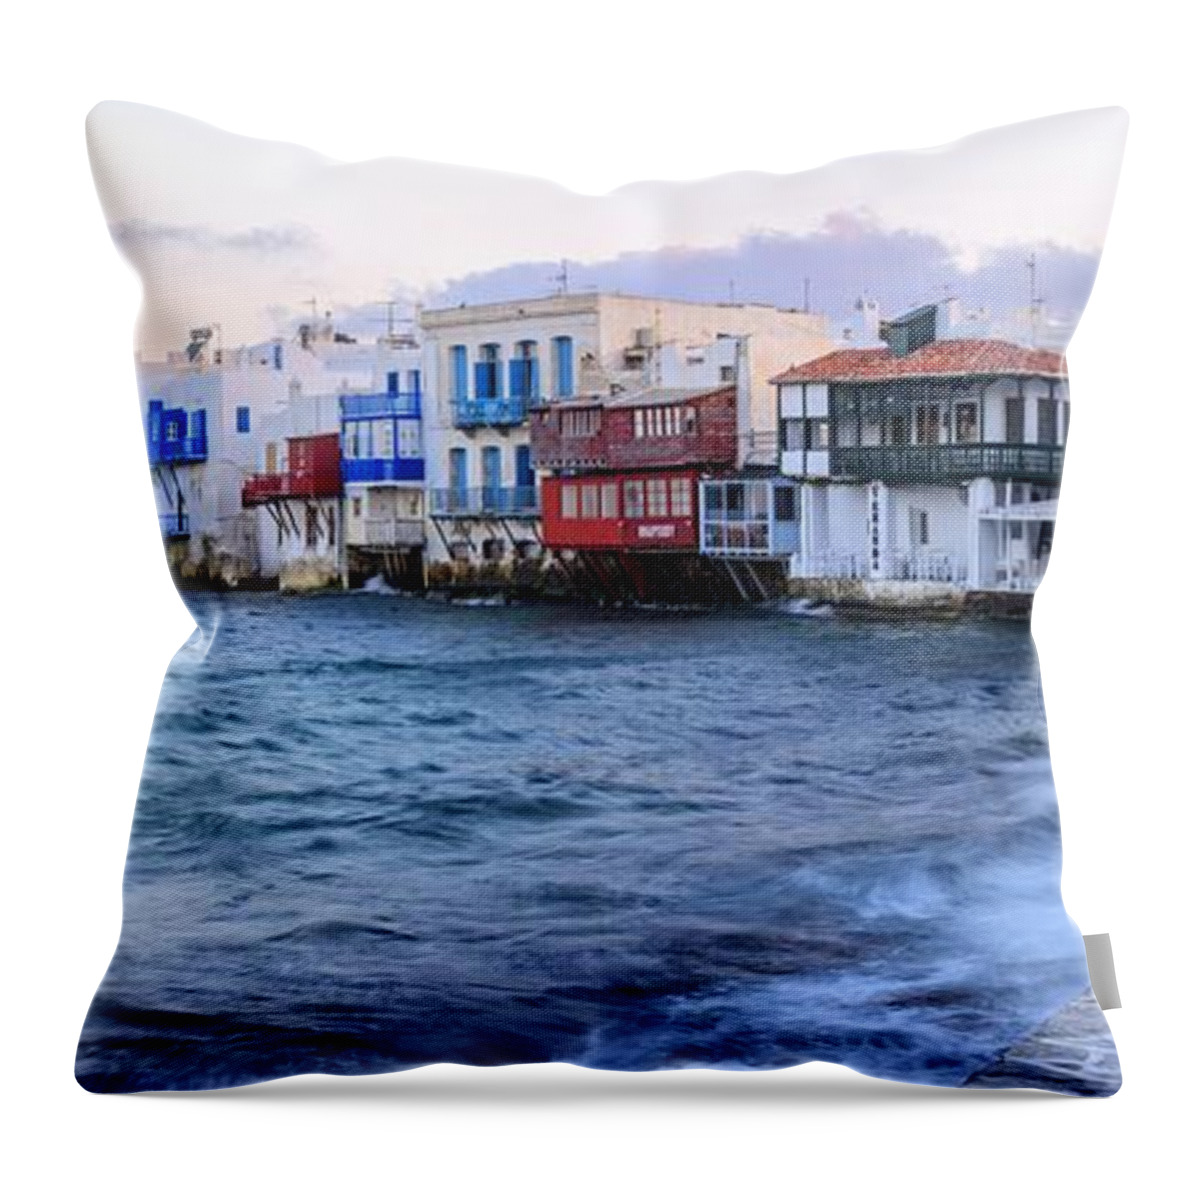 Little Venice Throw Pillow featuring the photograph Little Venice Sunrise by Brad Scott